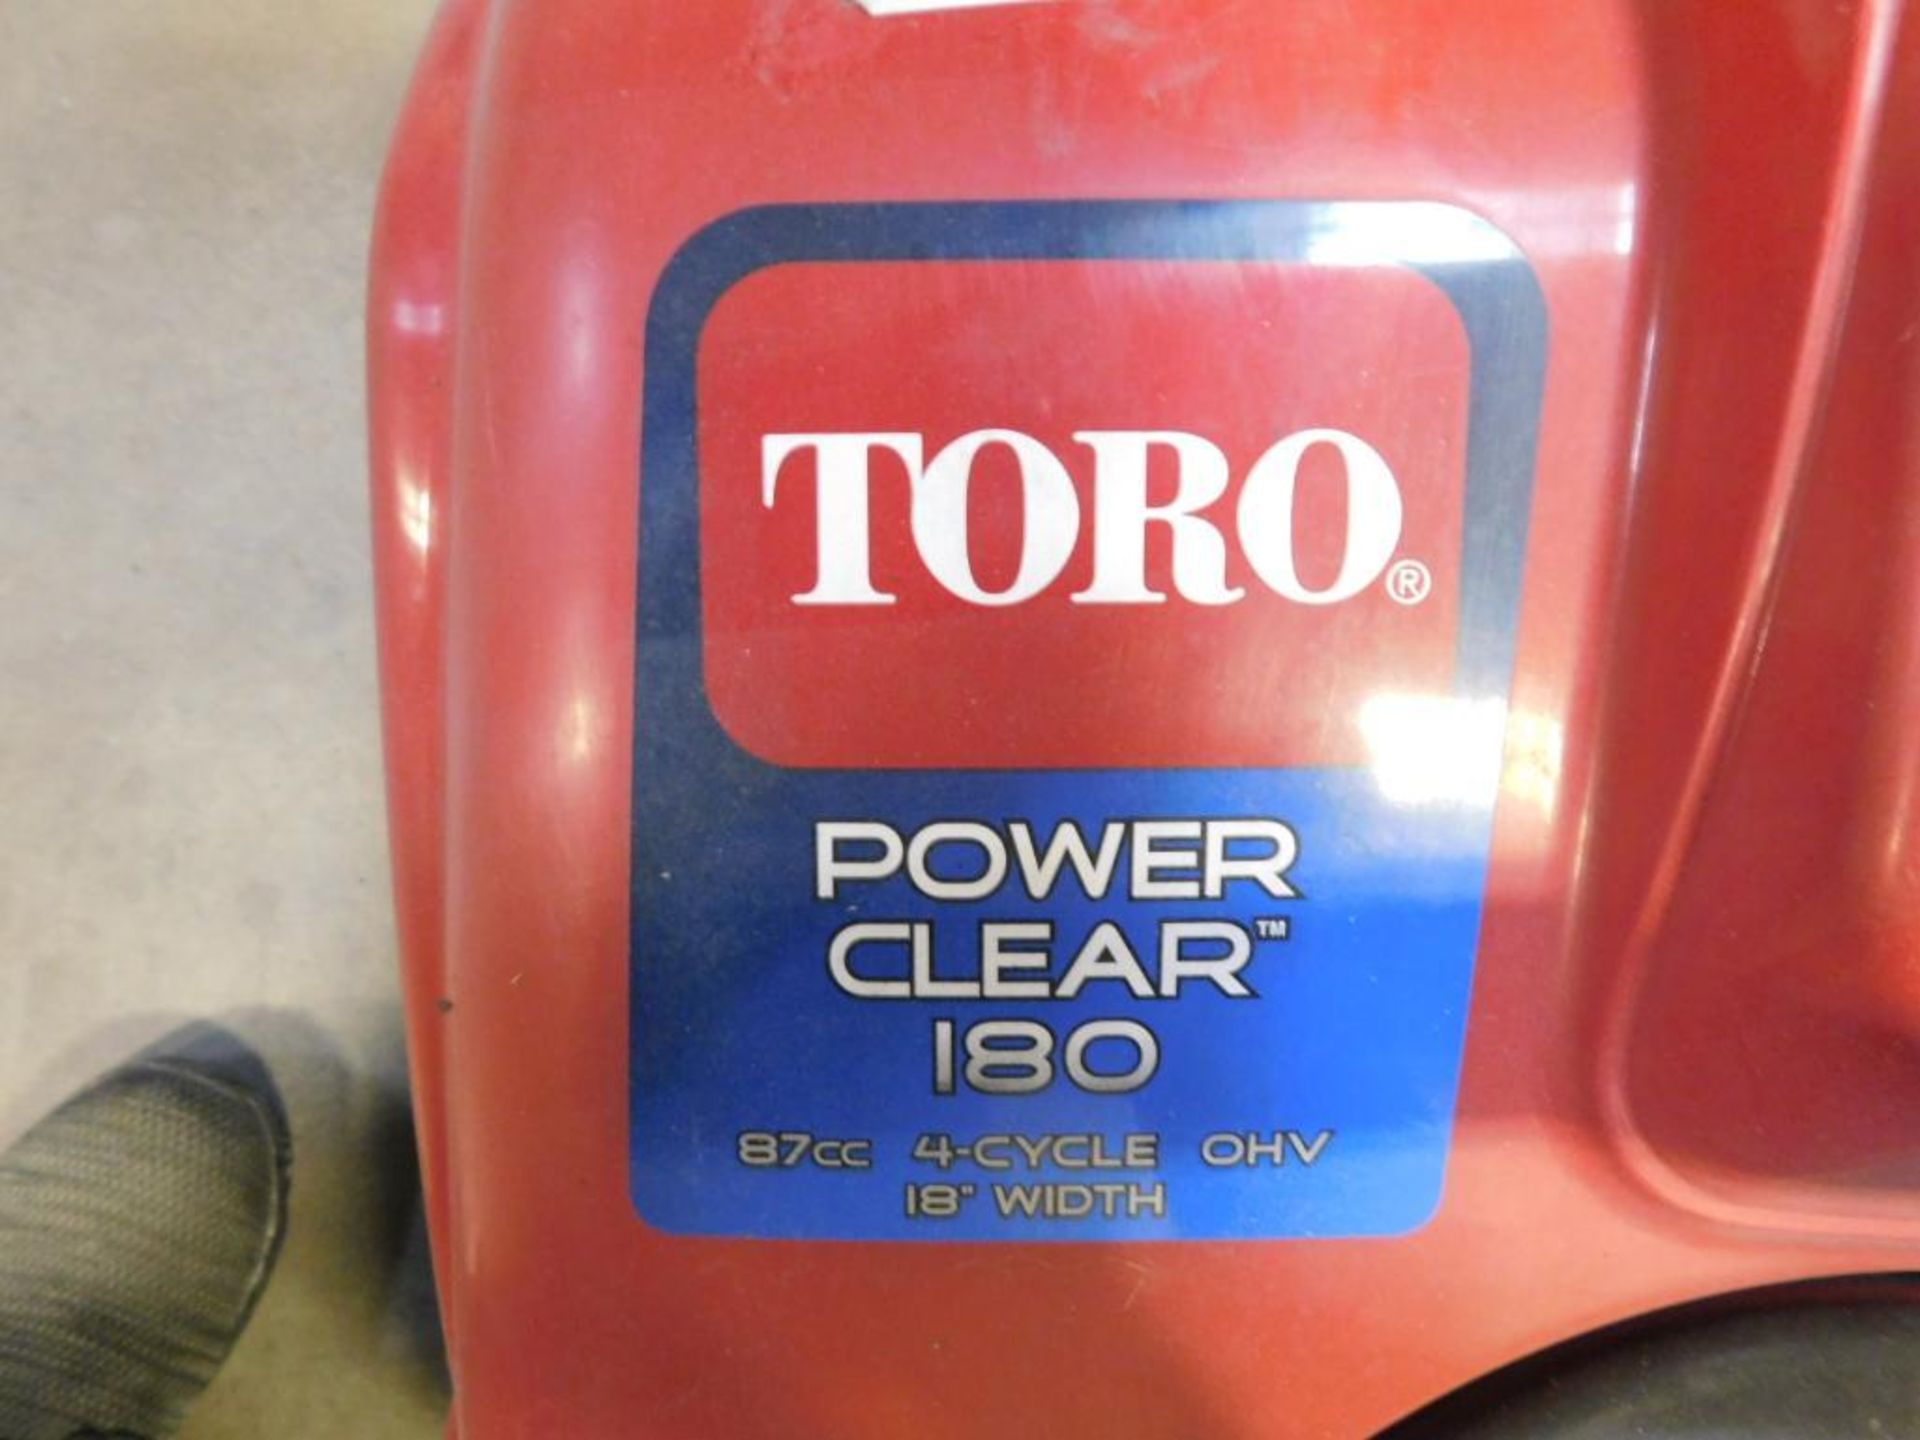 Toro Power Clear 180 Snow Thrower Model 38272, S/N 310005958 - Image 2 of 2